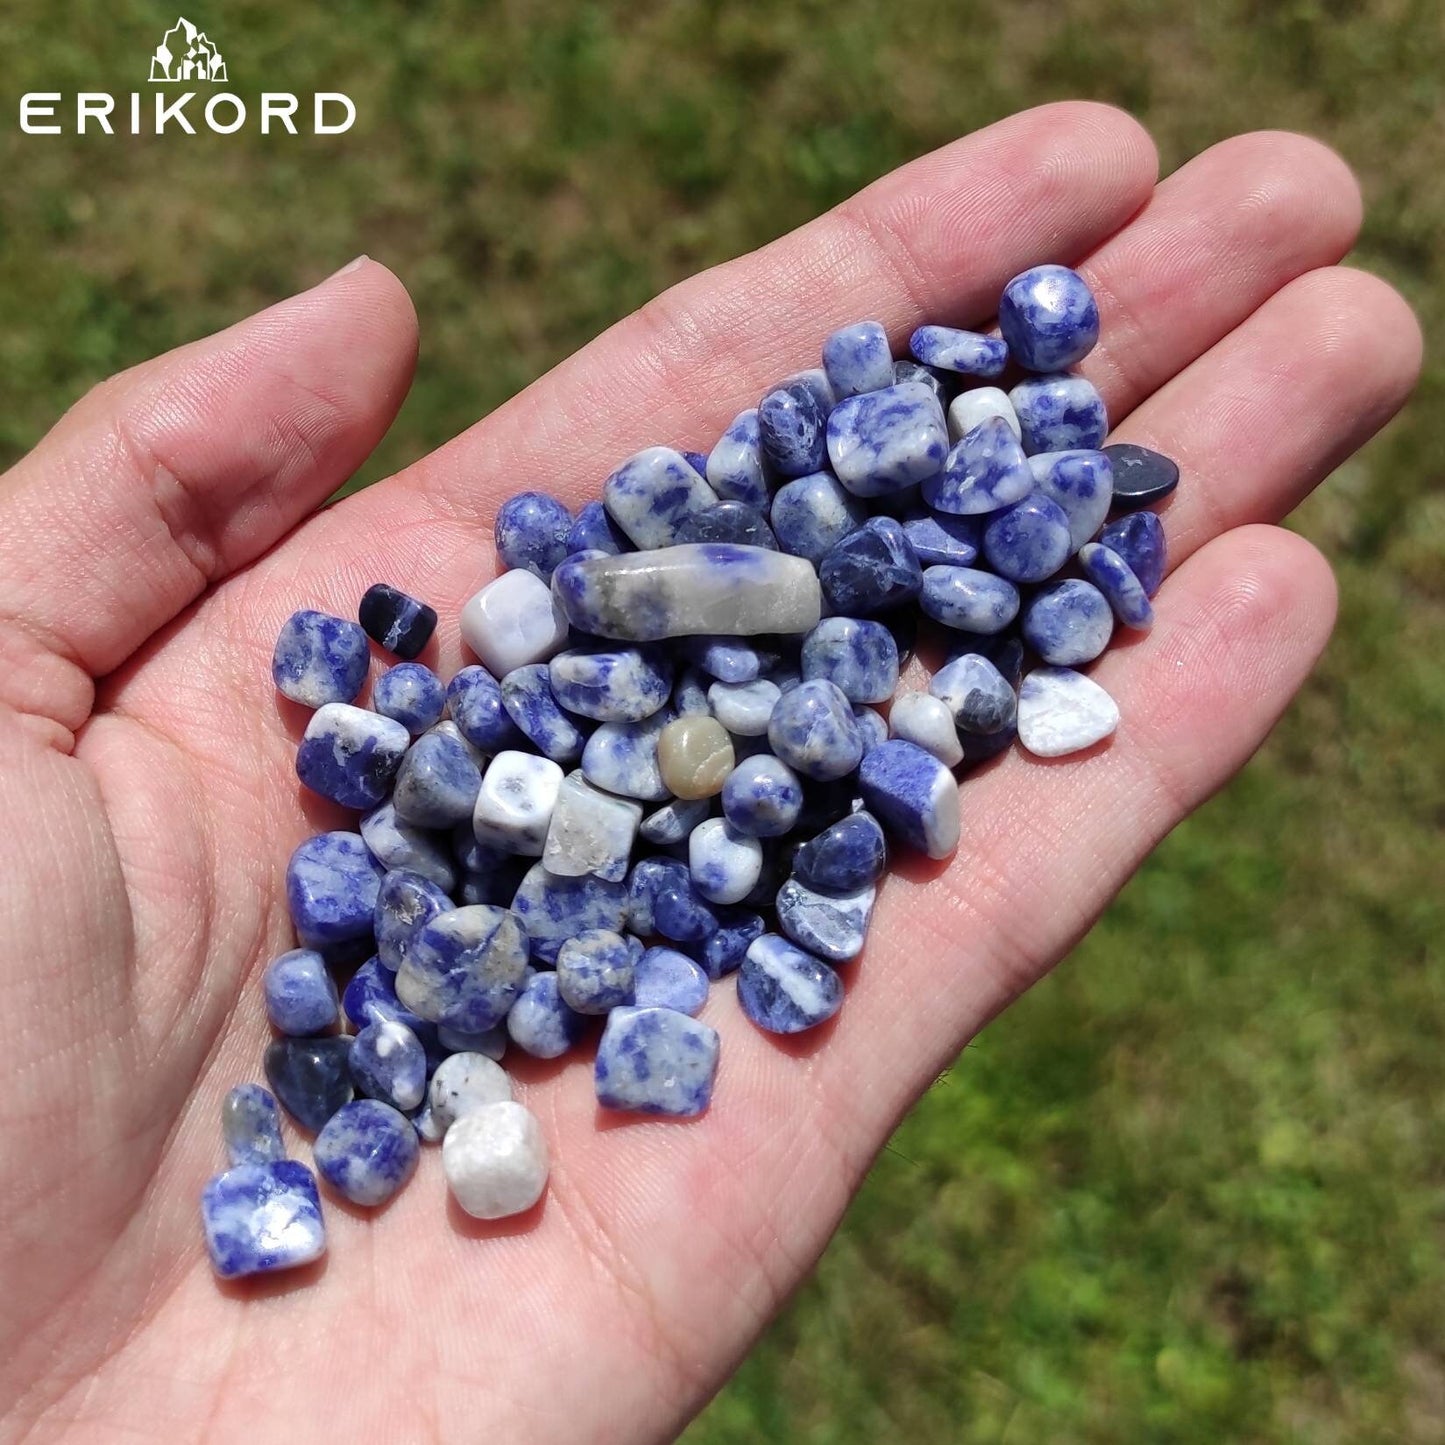 50/100/200g Sodalite Gravel 5-7mm Polished Blue Sodalite Tumbled Stones Natural India Sodalite Loose Gemstones Crystal Gravel Stones Lot